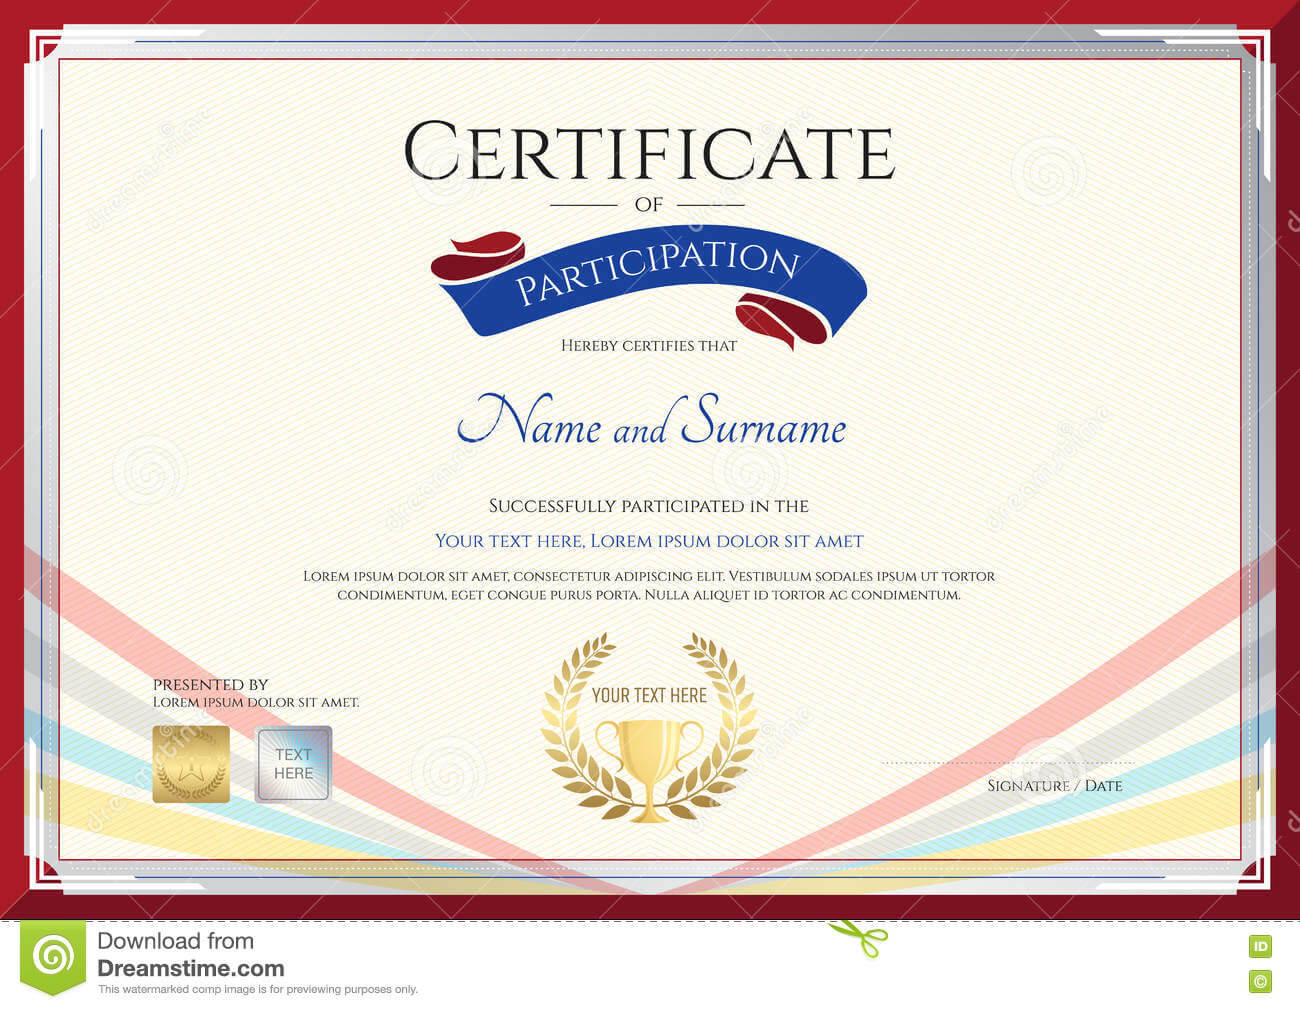 Certificate Template For Achievement, Appreciation Or Regarding International Conference Certificate Templates